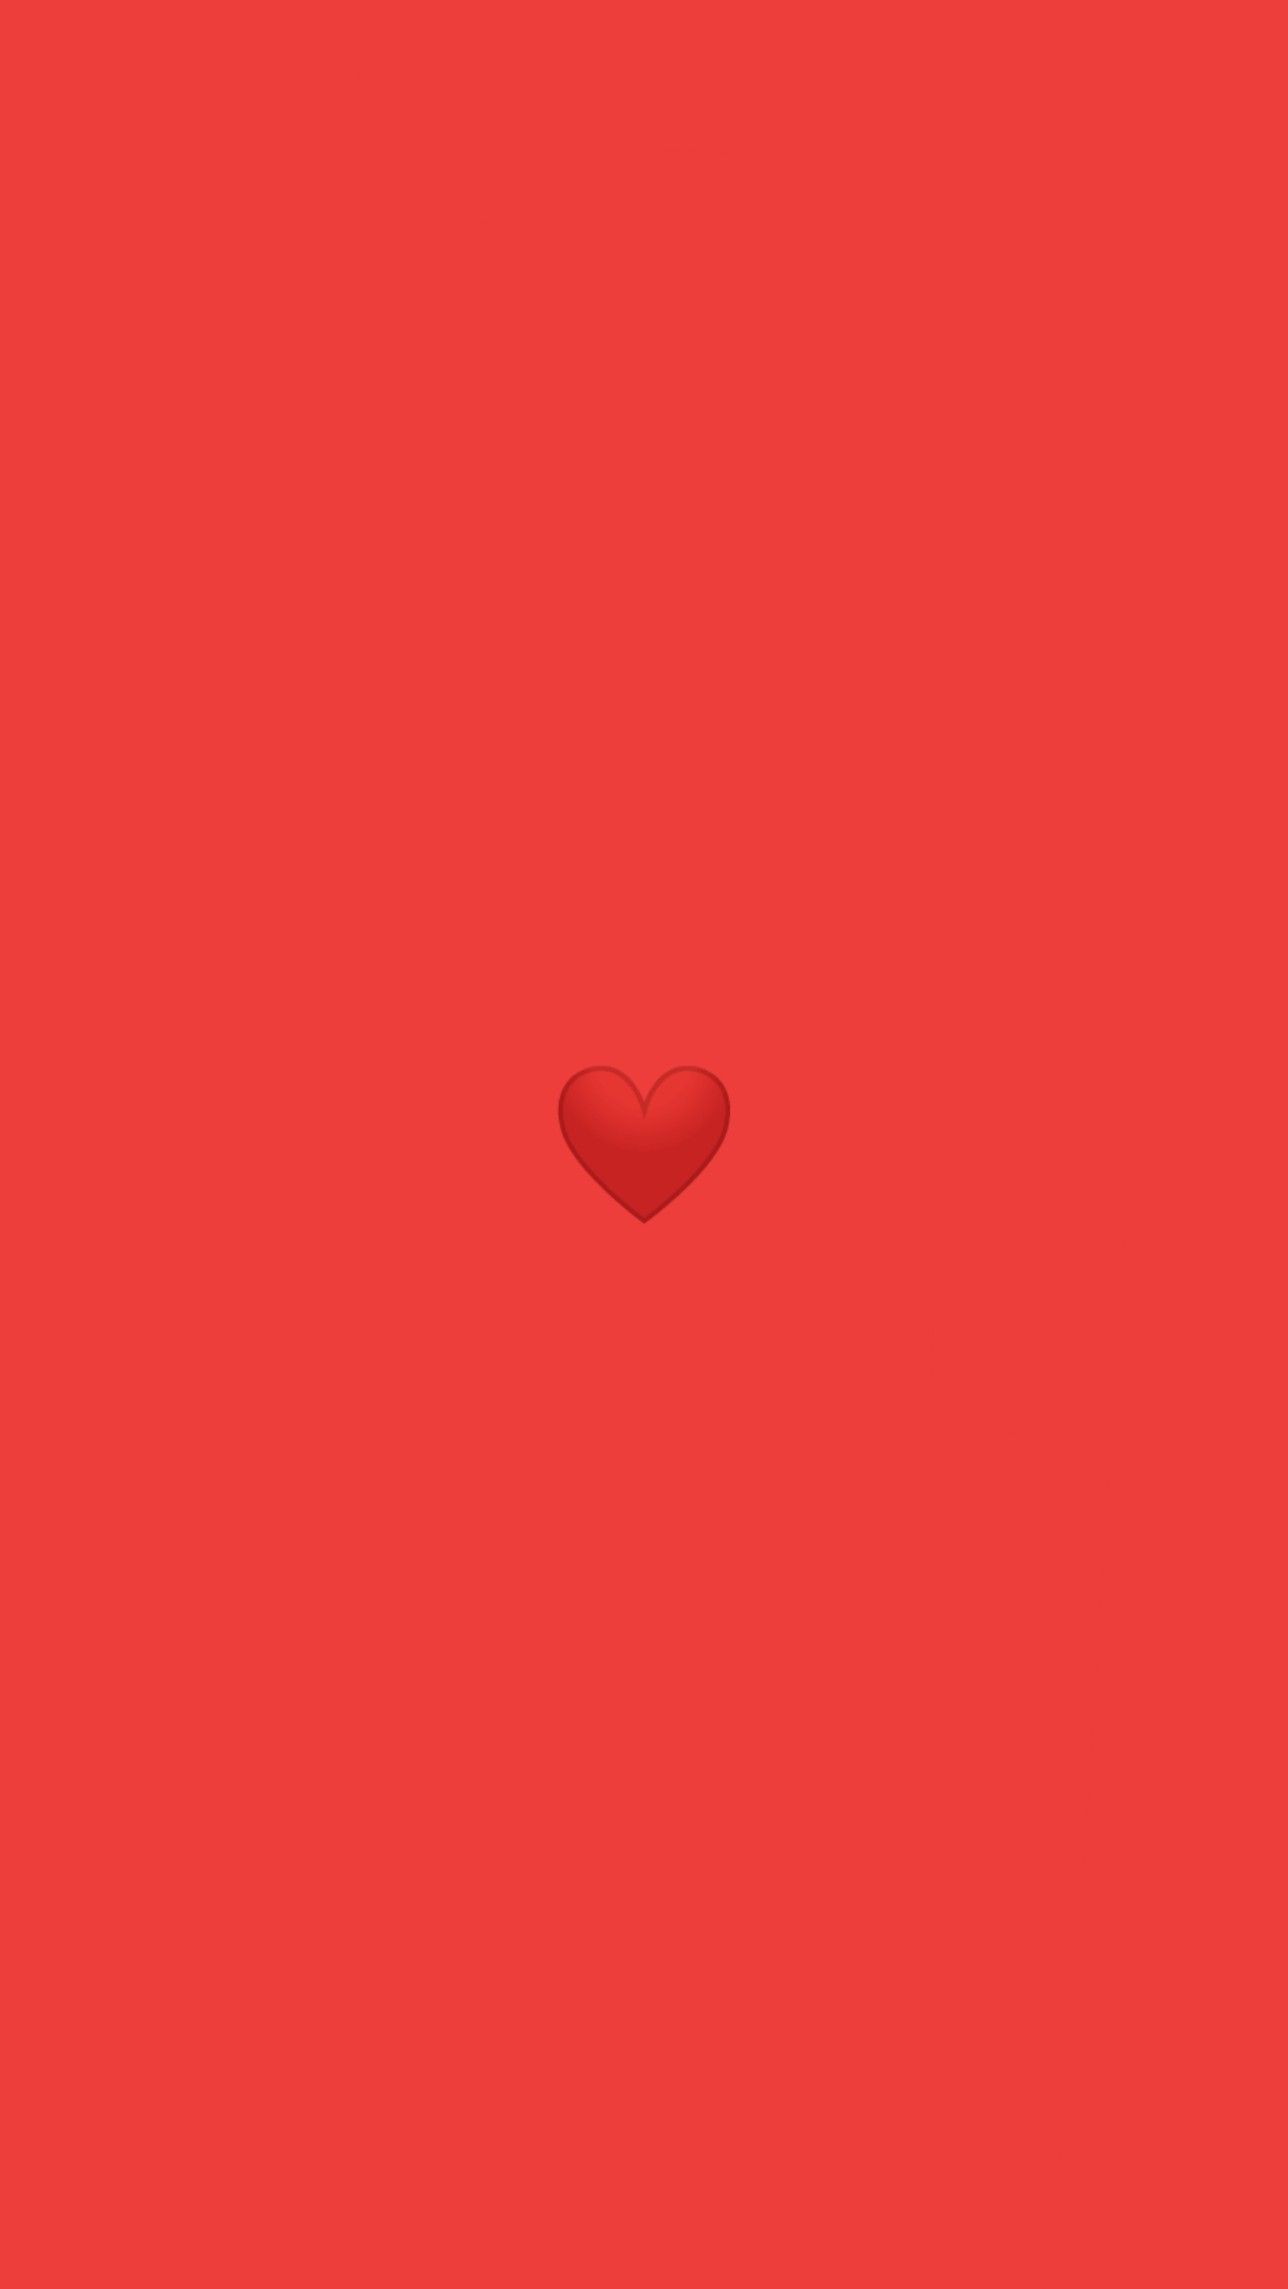 Free Heart Emoji Background  EPS Illustrator JPG SVG  Templatenet